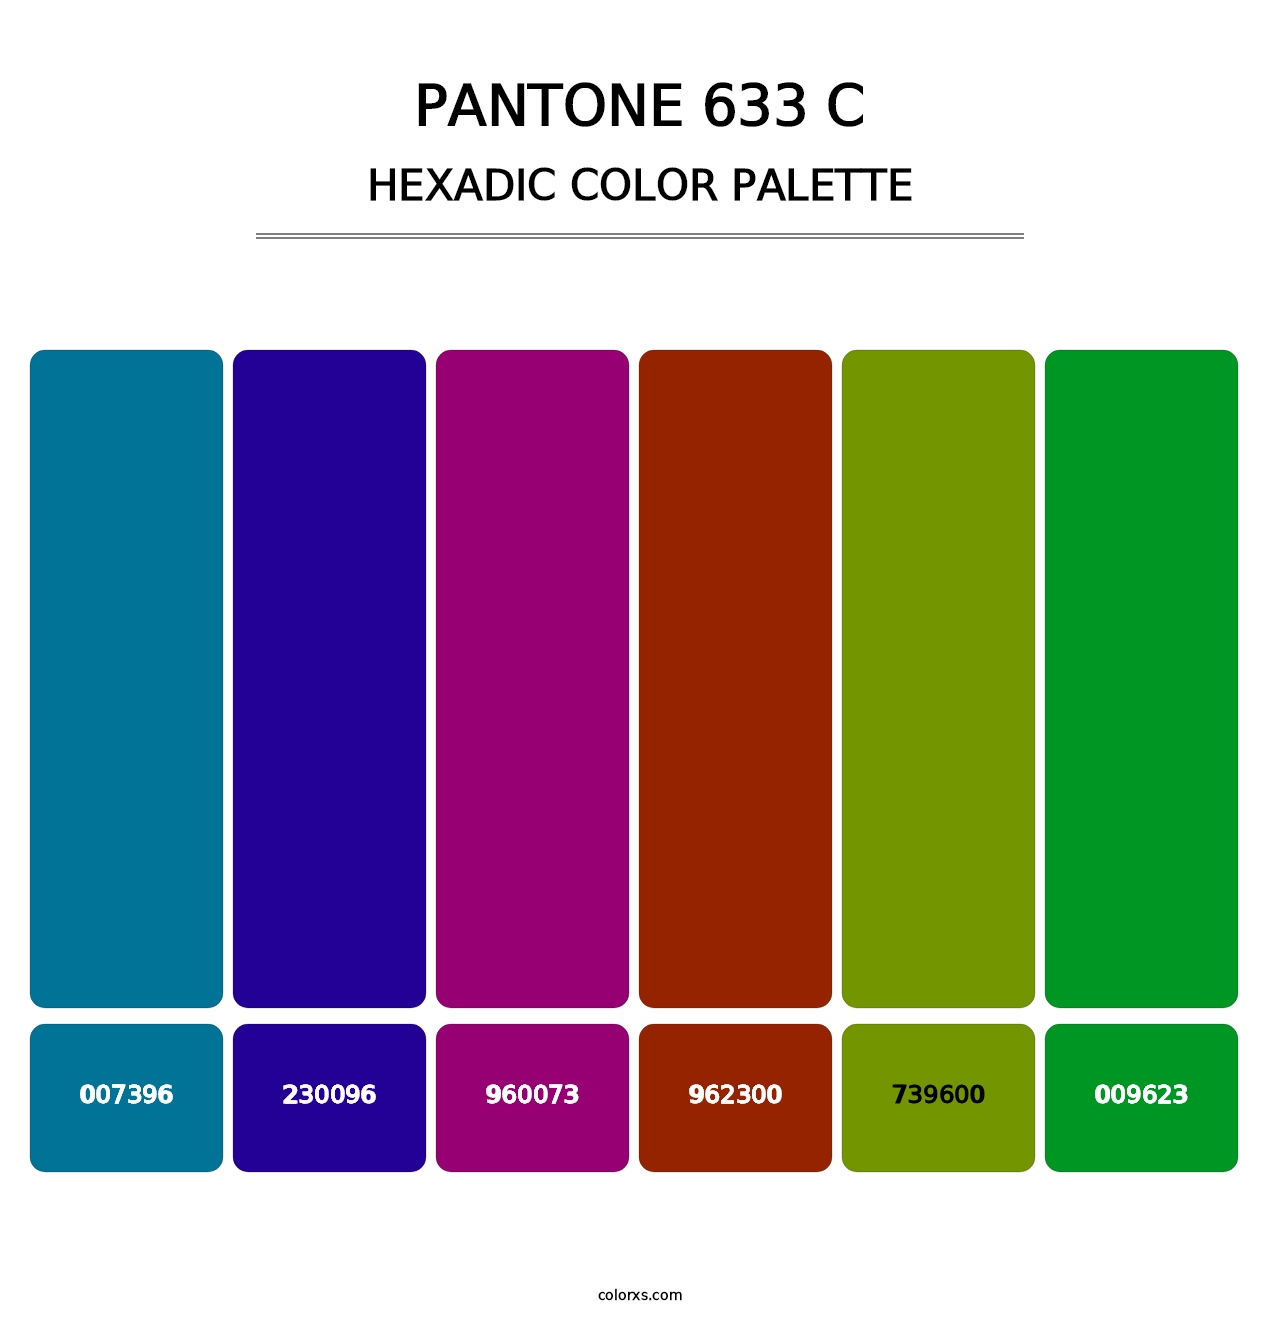 PANTONE 633 C - Hexadic Color Palette